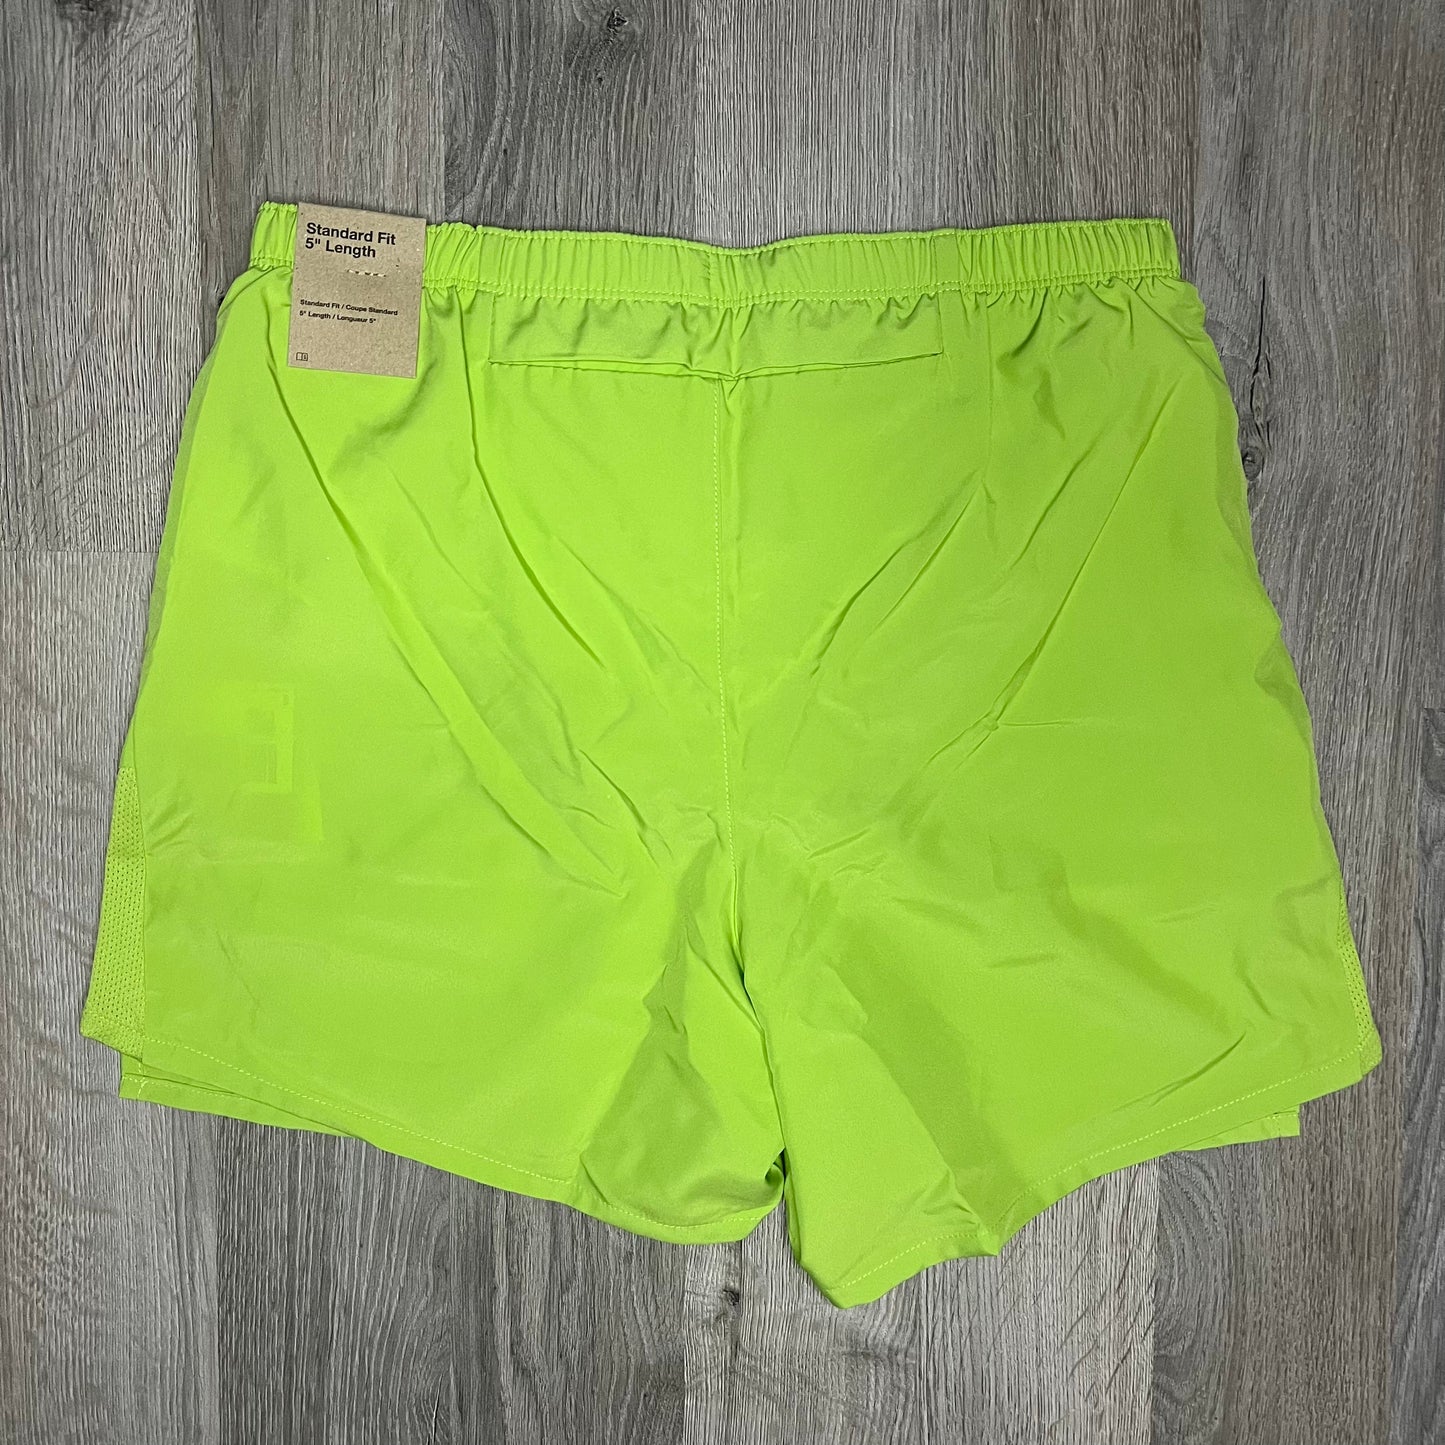 Nike Run Division Swoosh Challenger Shorts - Vivid Green / Medium Blue